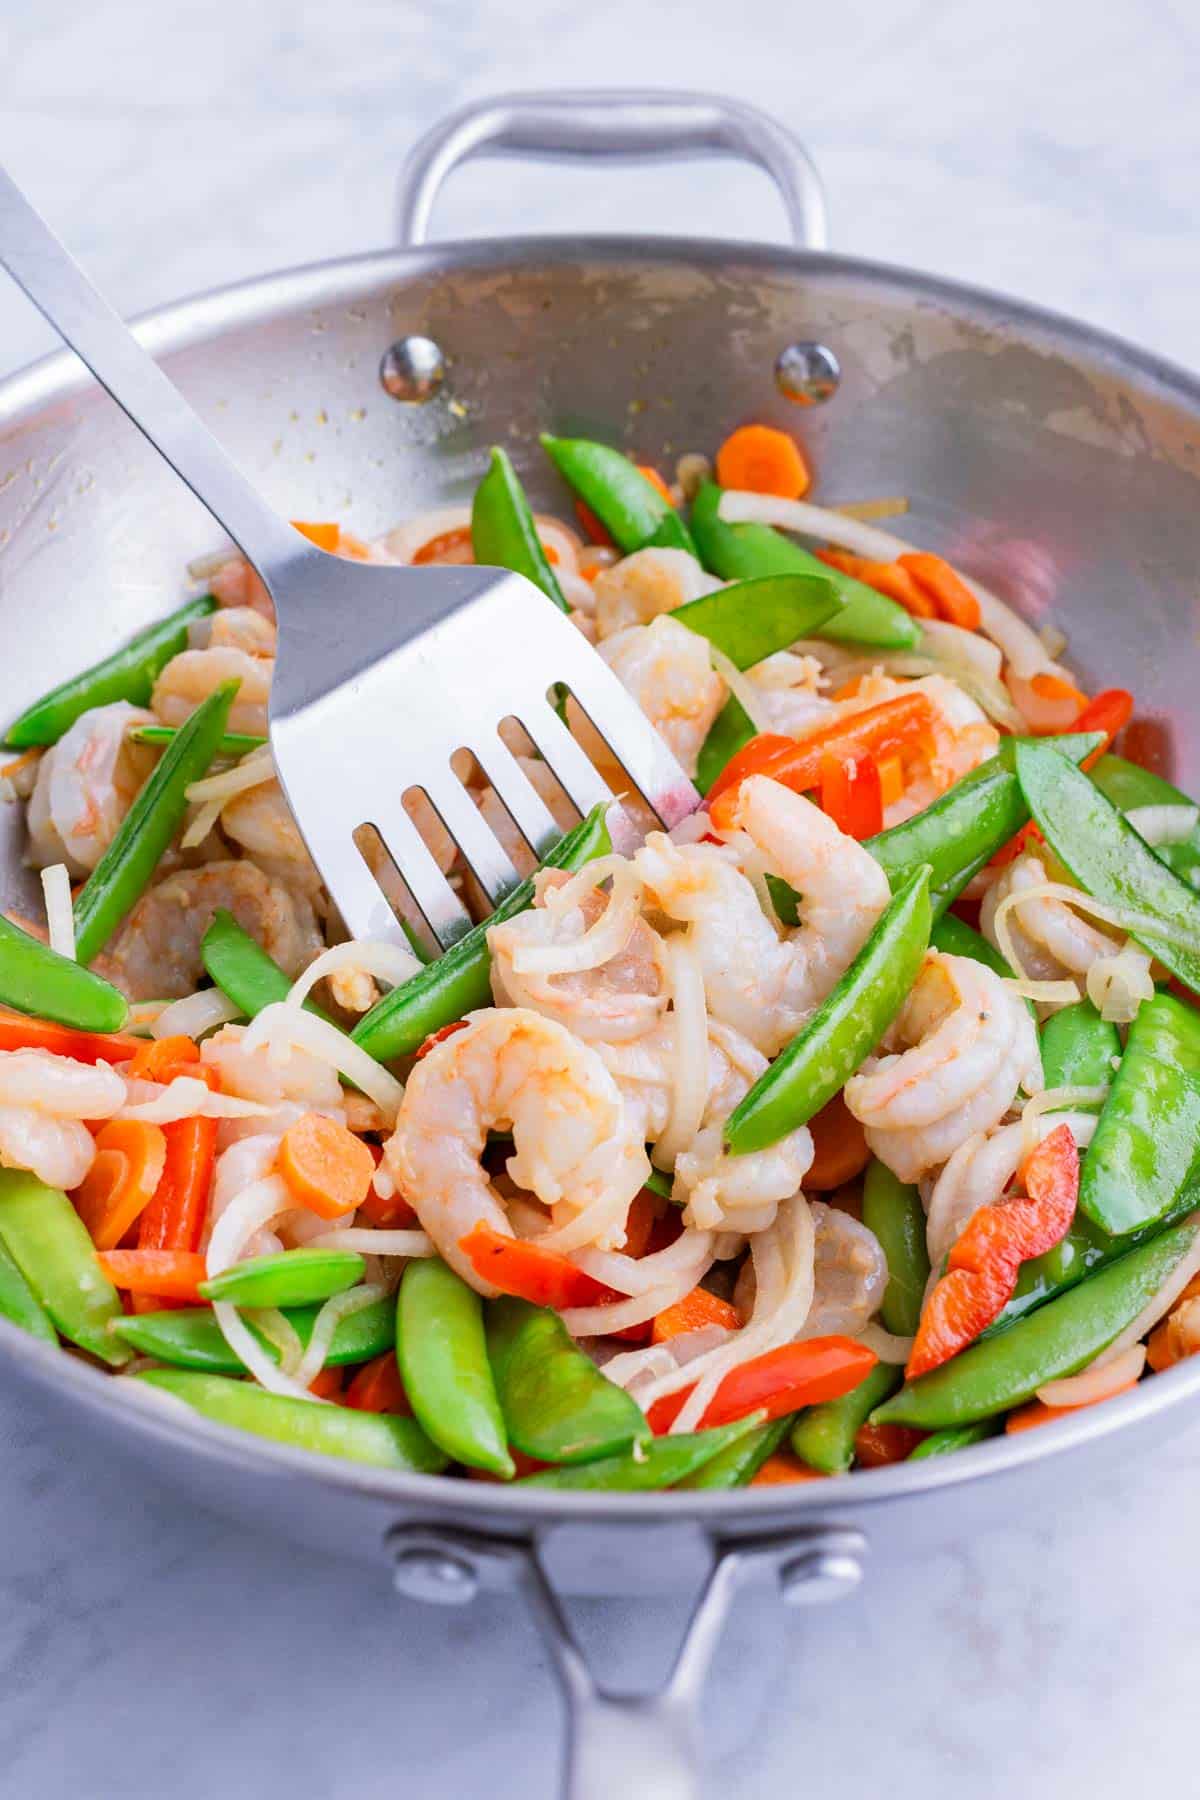 Shrimp is stirred into the veggies.